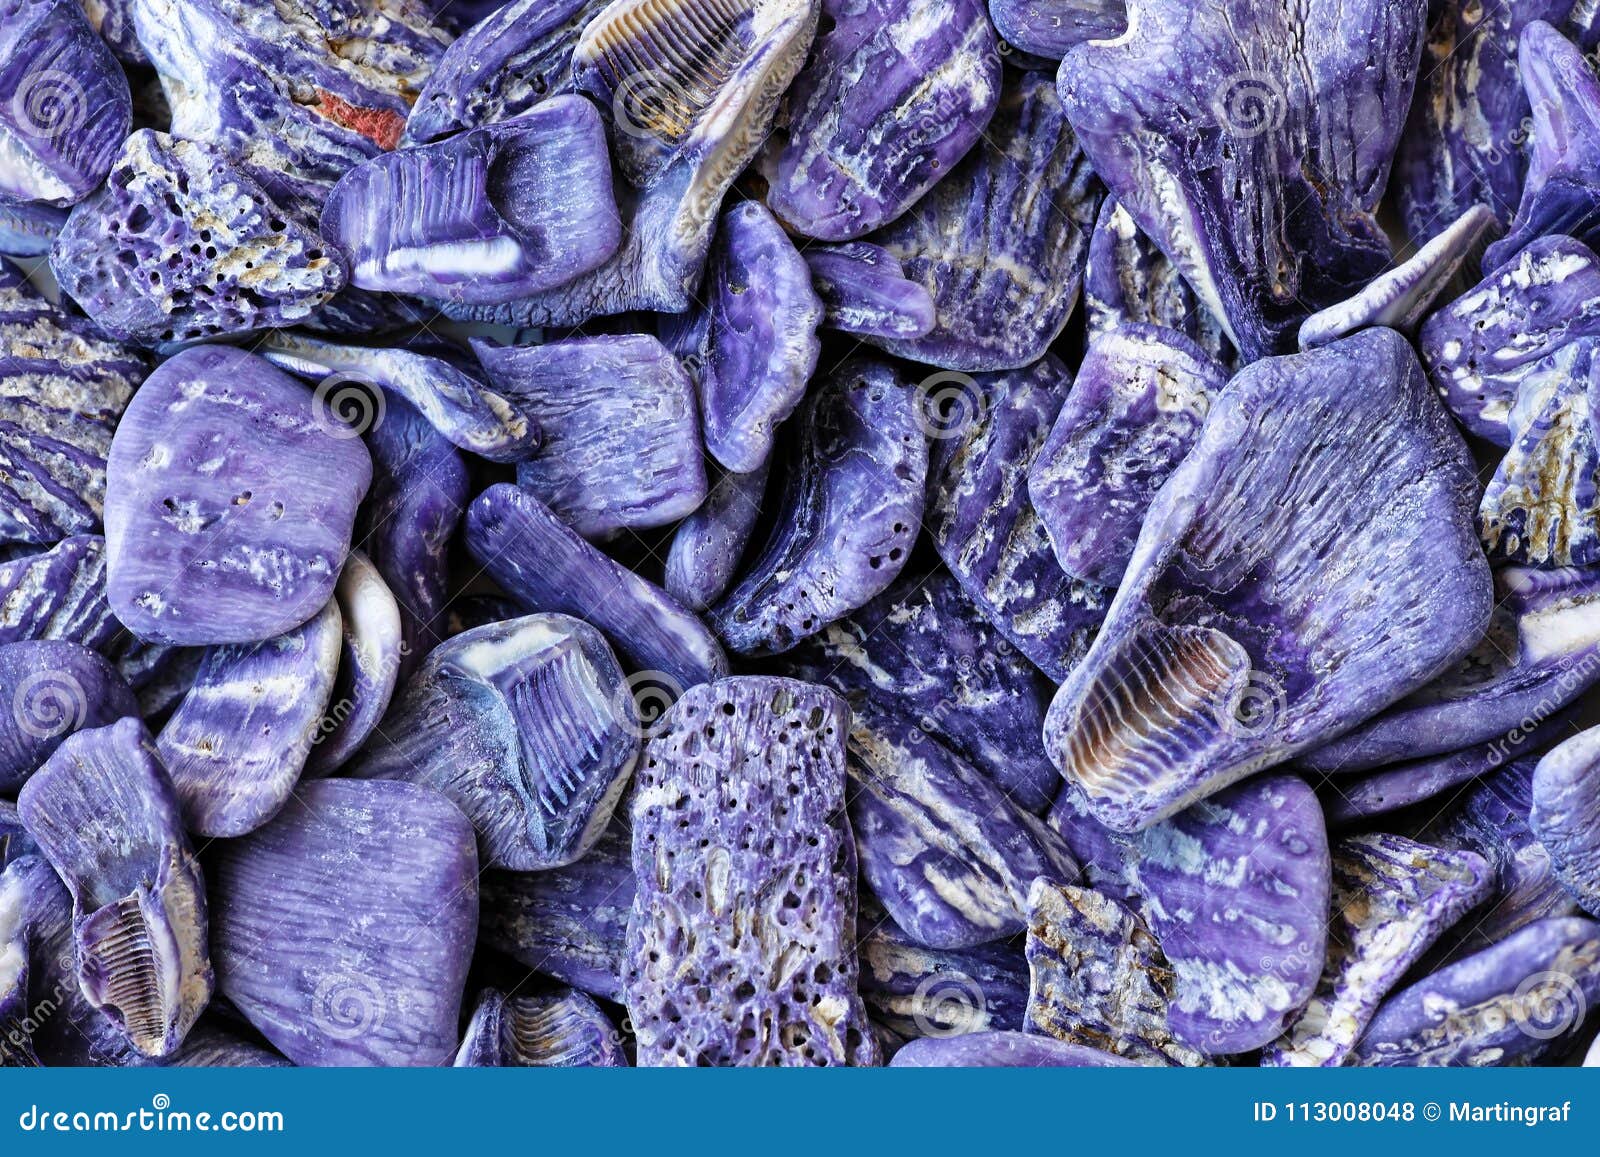 purple seashells close-up, fragments of barrier reef of australia